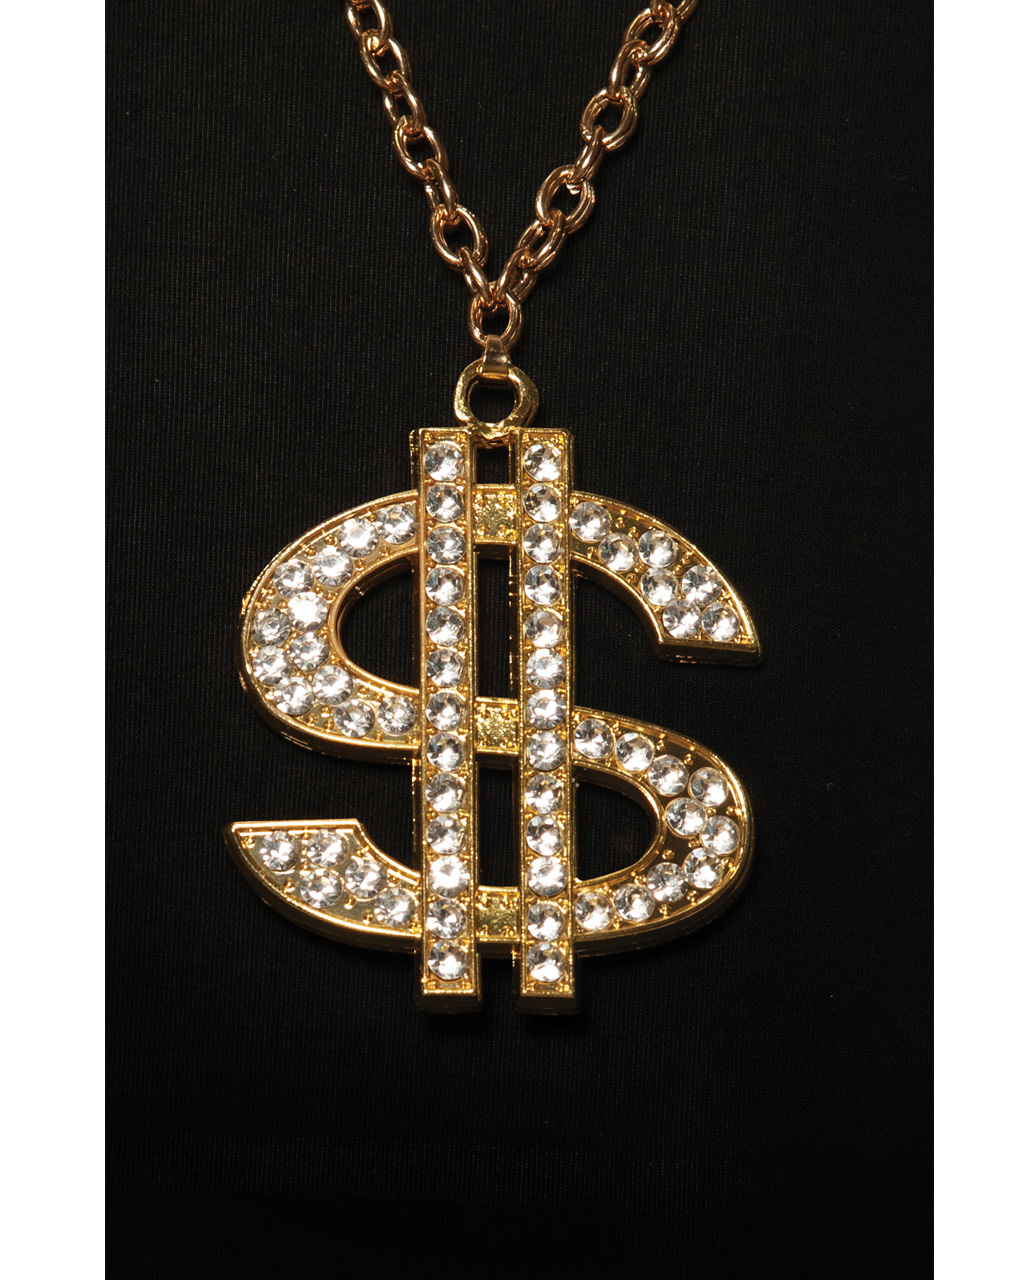 Mafia Goldkette Modeschmuck Goldene Dollerkette Halskette mit Dollarnote 